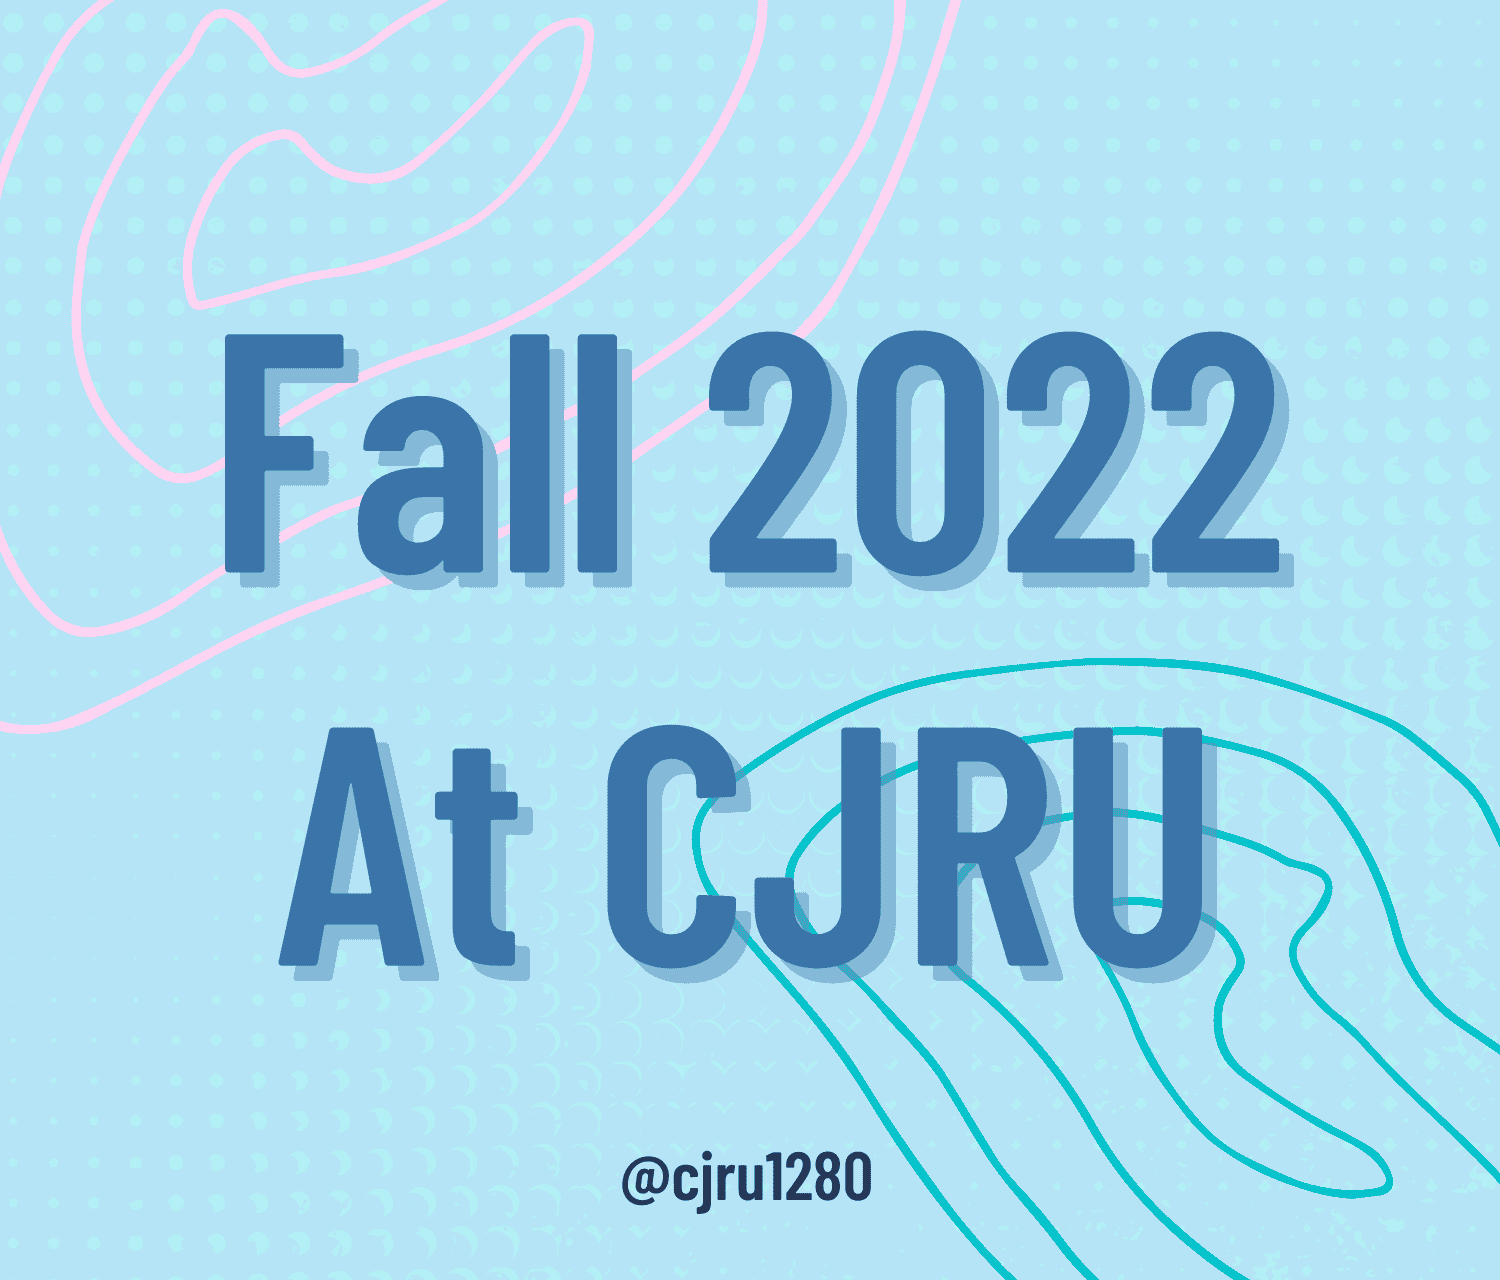 Fall 2022 At CJRU with social media handle at the bottom reading cjru 1280 AM